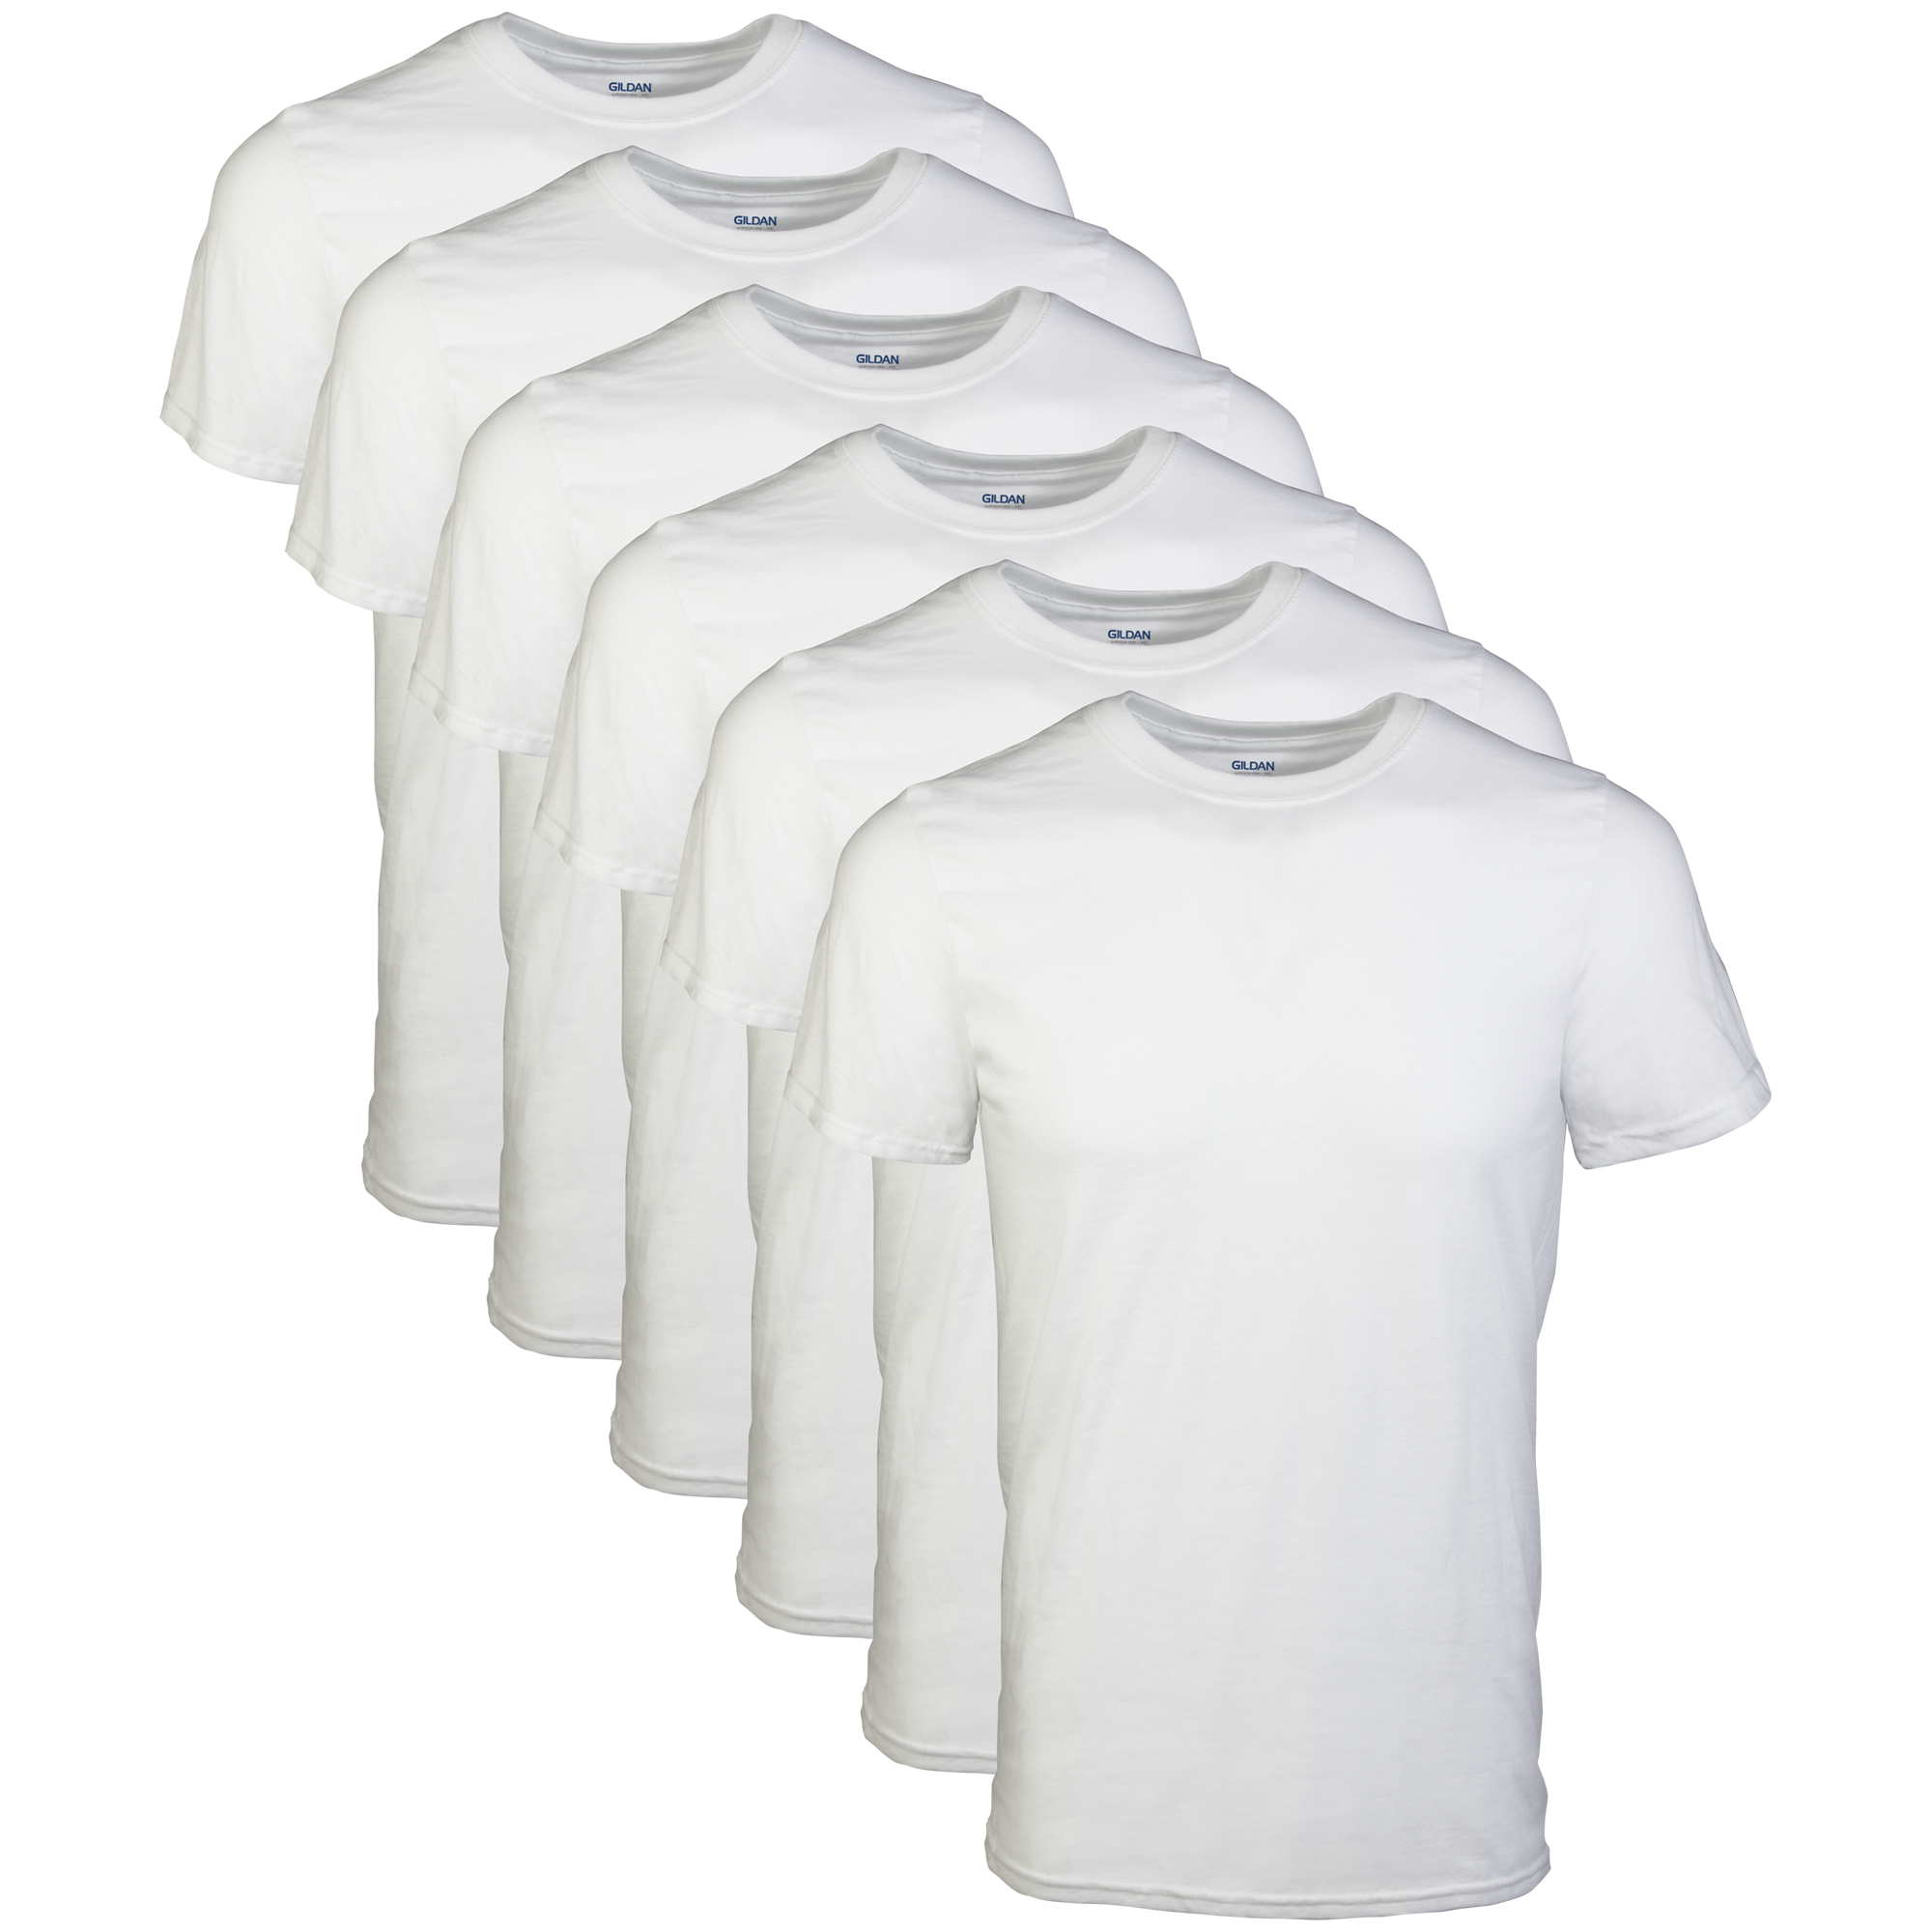 Gildan Adult Men's Short Sleeve Crew White T-Shirt, 6-Pack, Sizes S-2XL - image 3 of 4